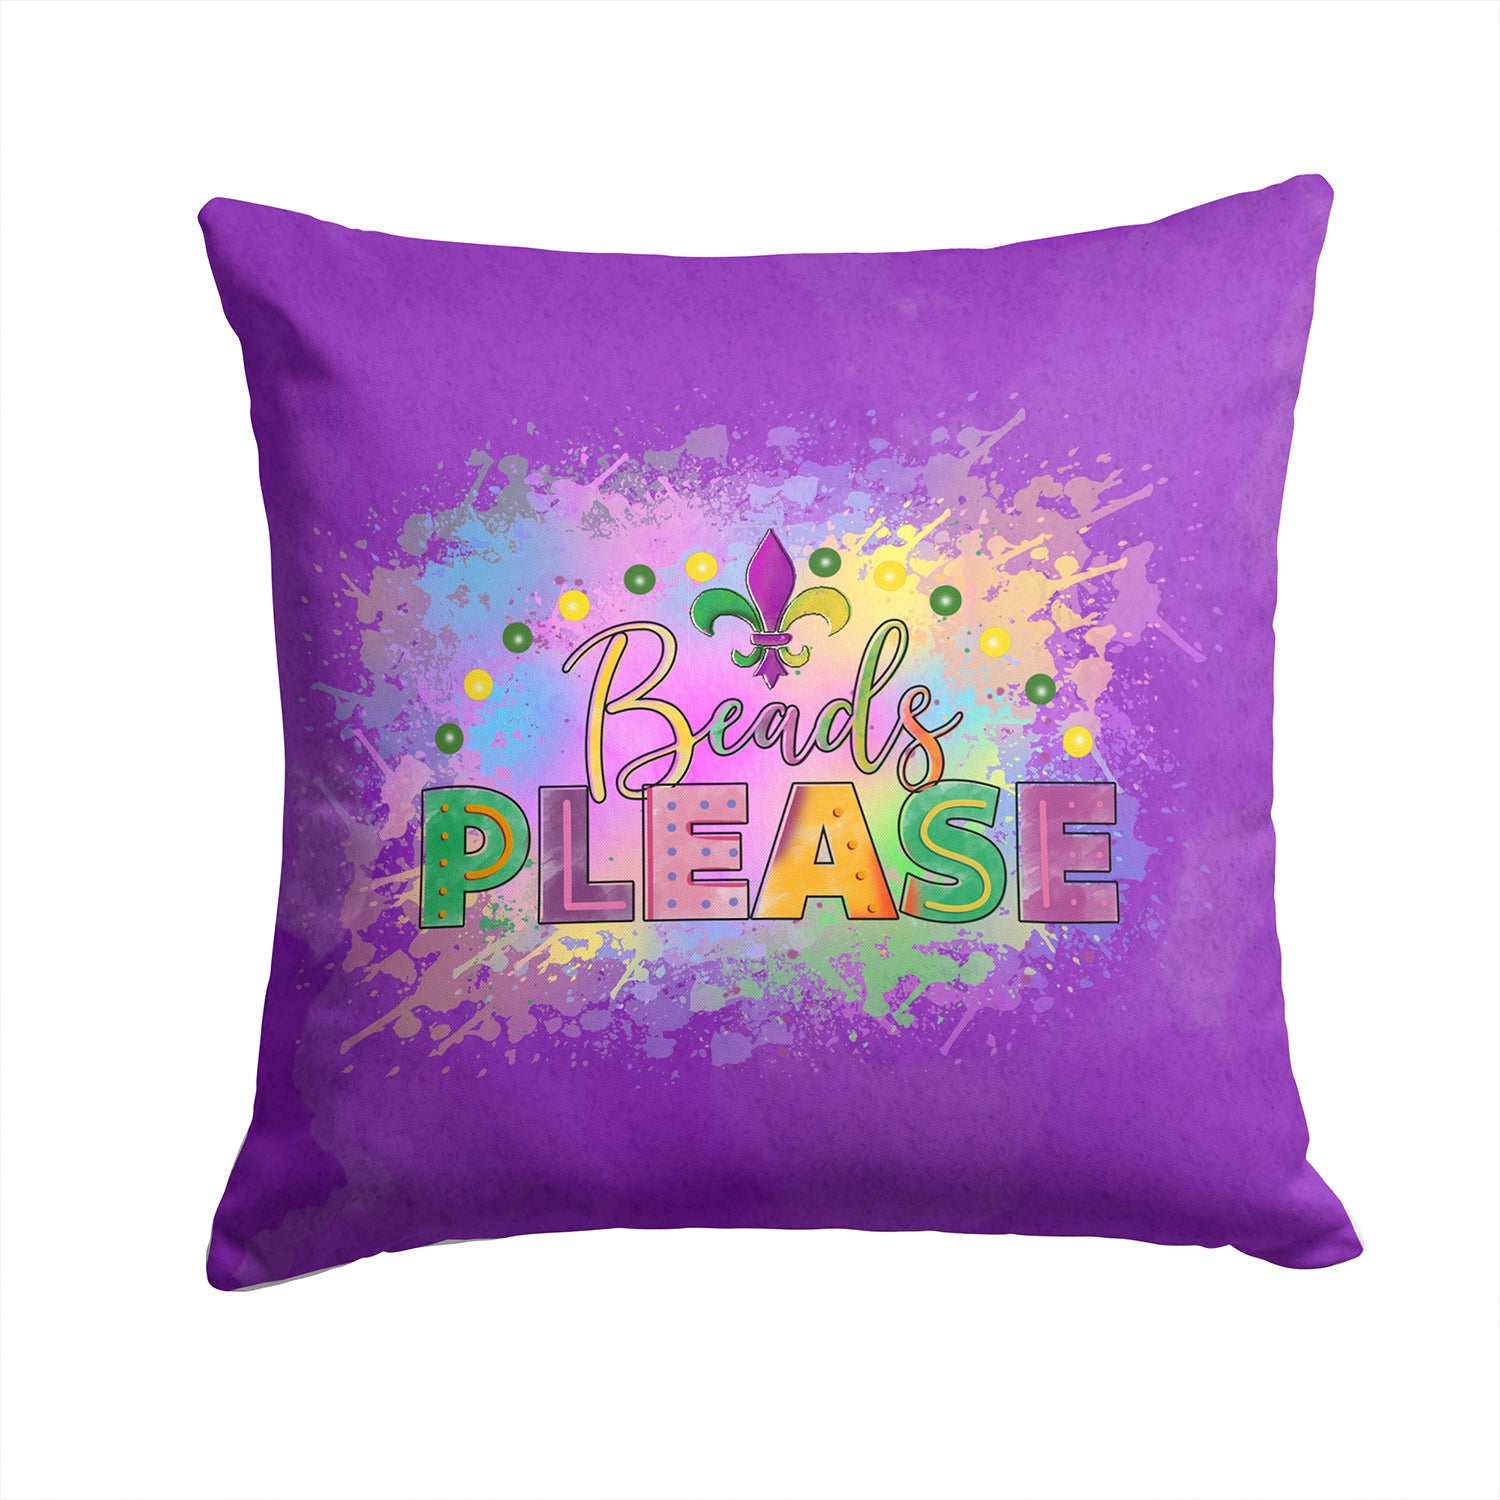 Buy this Beads Please Mardi Gras Fabric Decorative Pillow